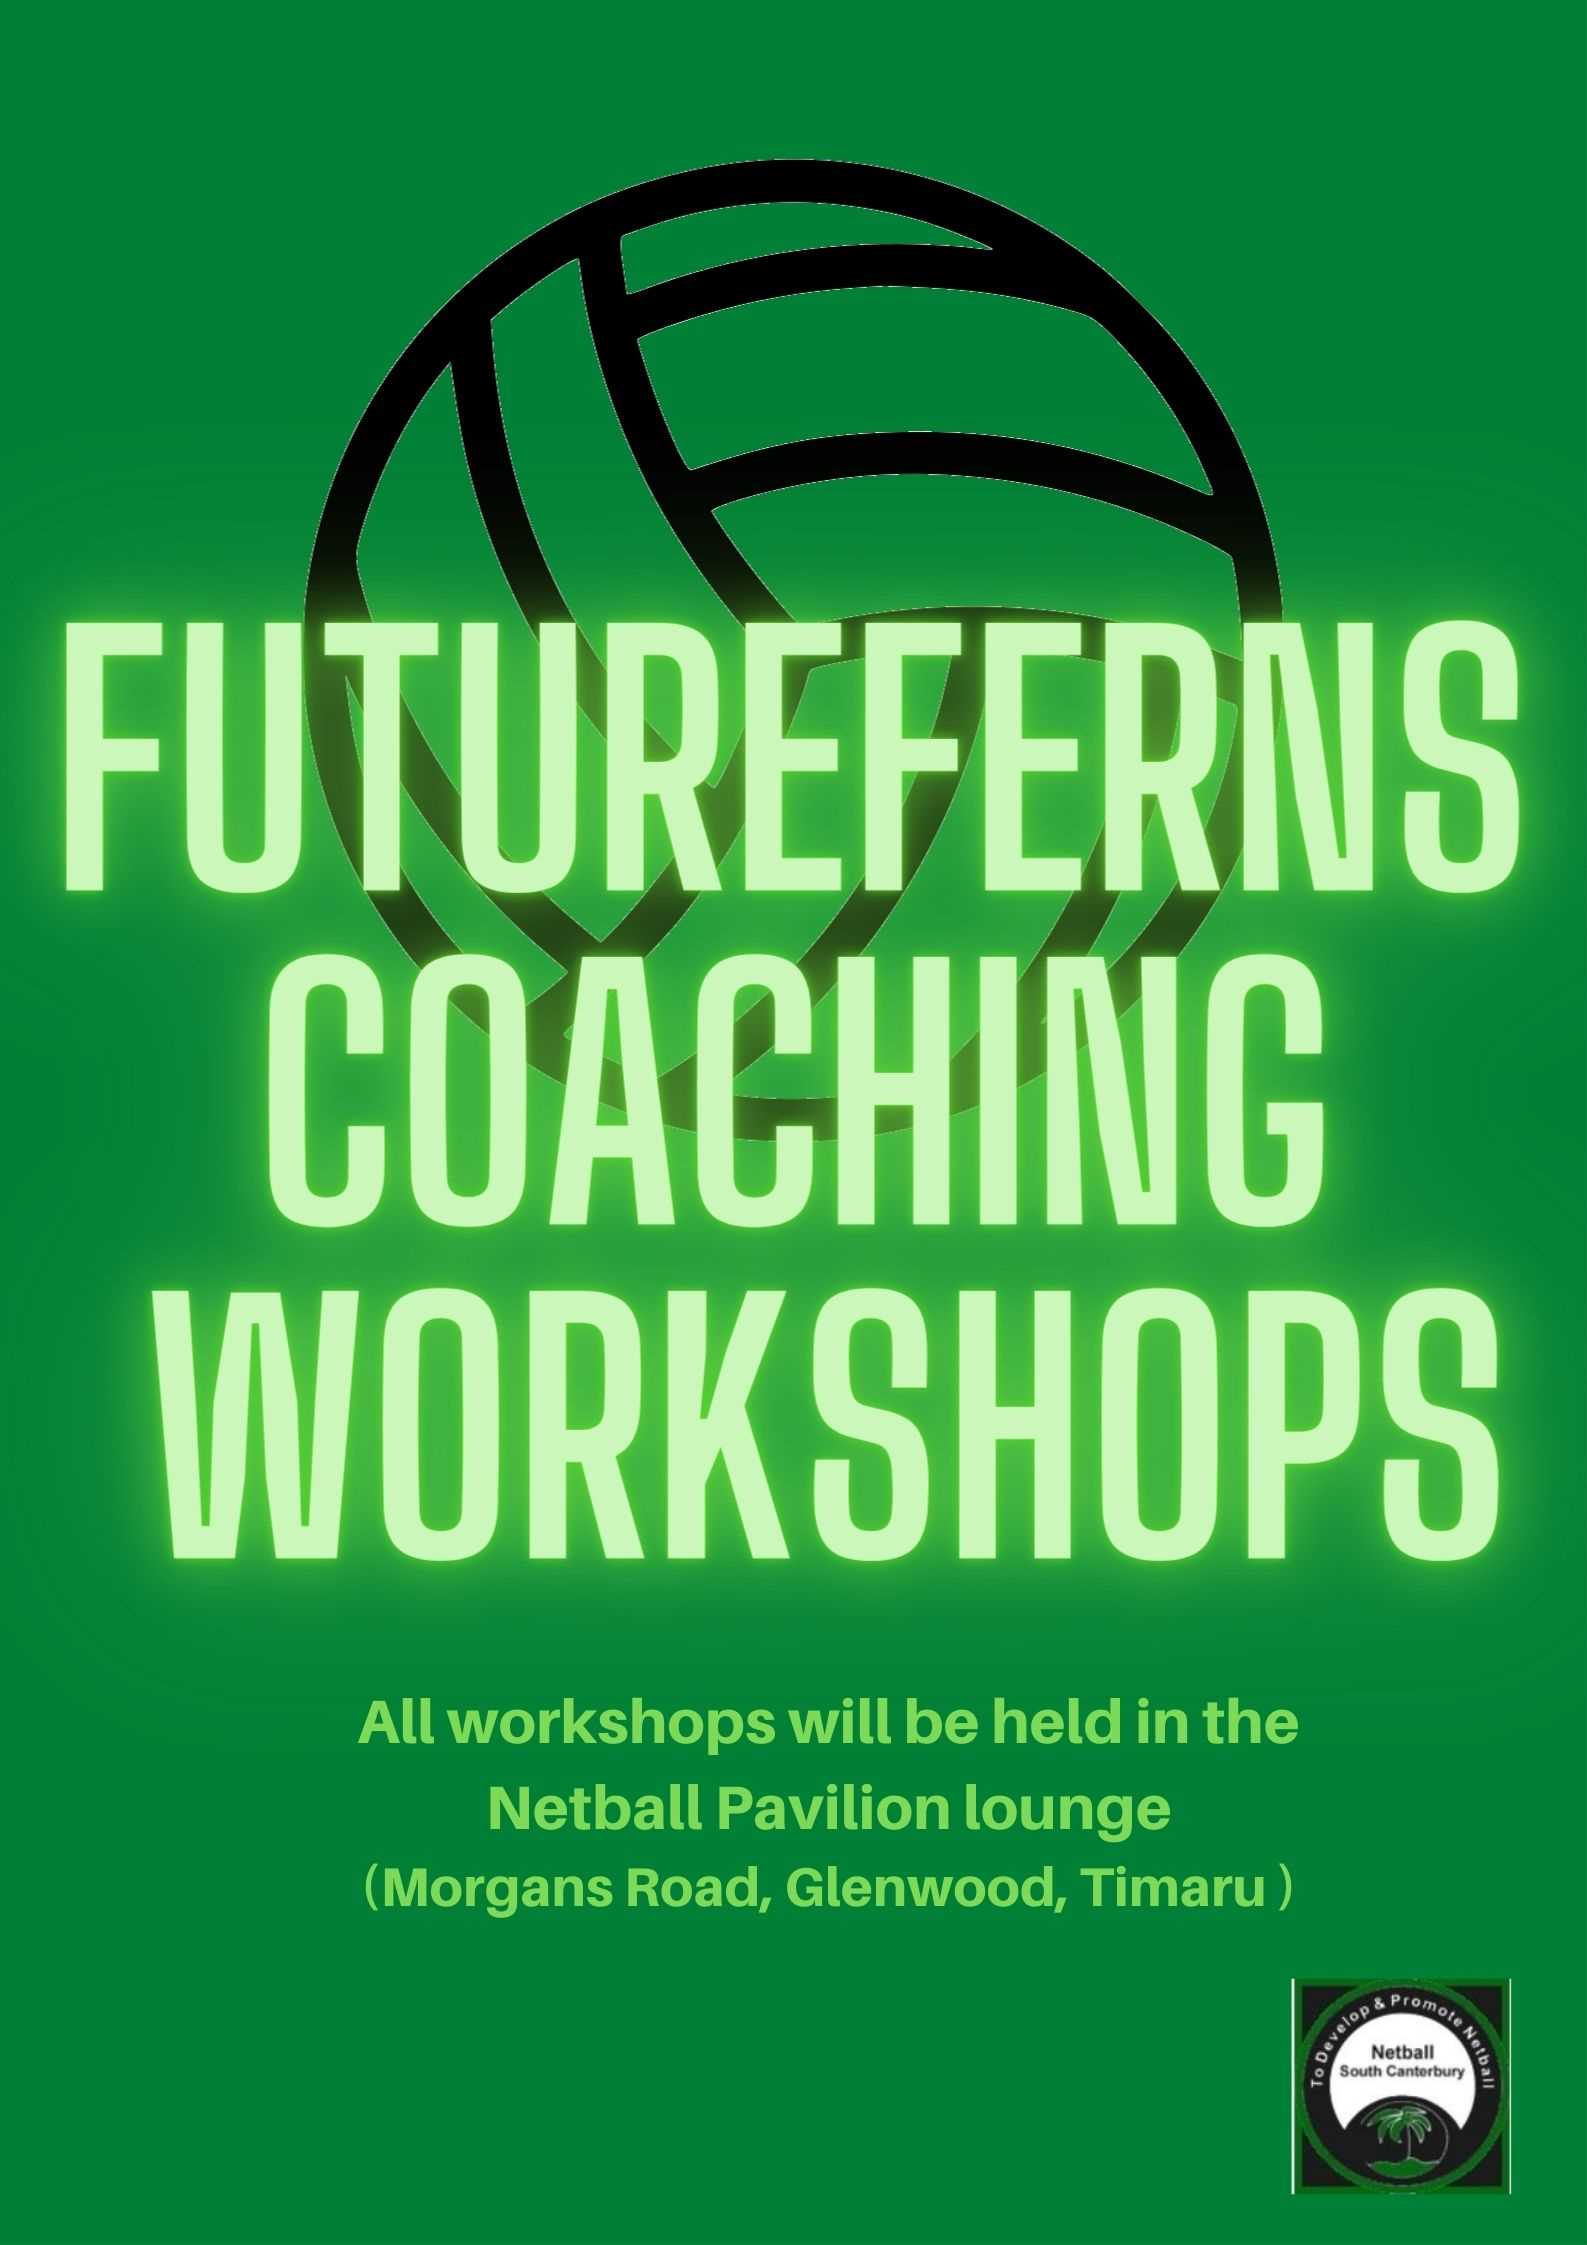 FutureFerns Compulsory Coach Training Date